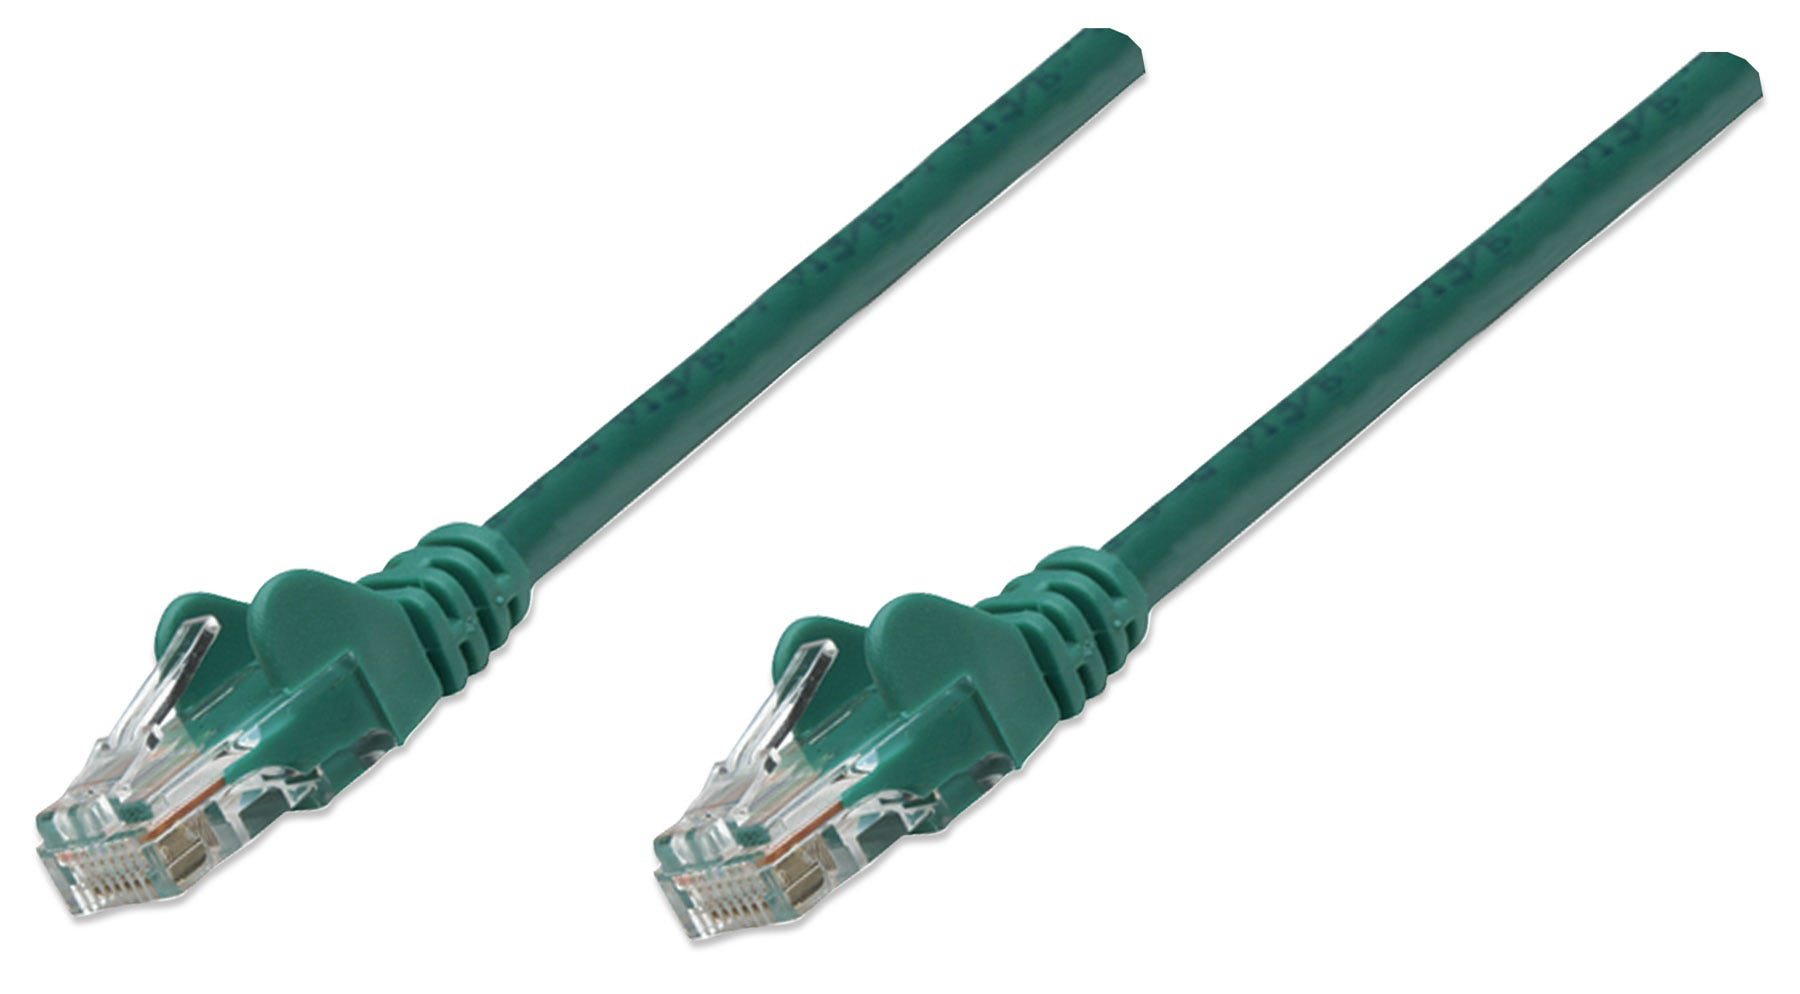 Cable De Red Cat6 Utp Intelliinet Rj45 Macho-Macho 1.5Mts Verde 342483